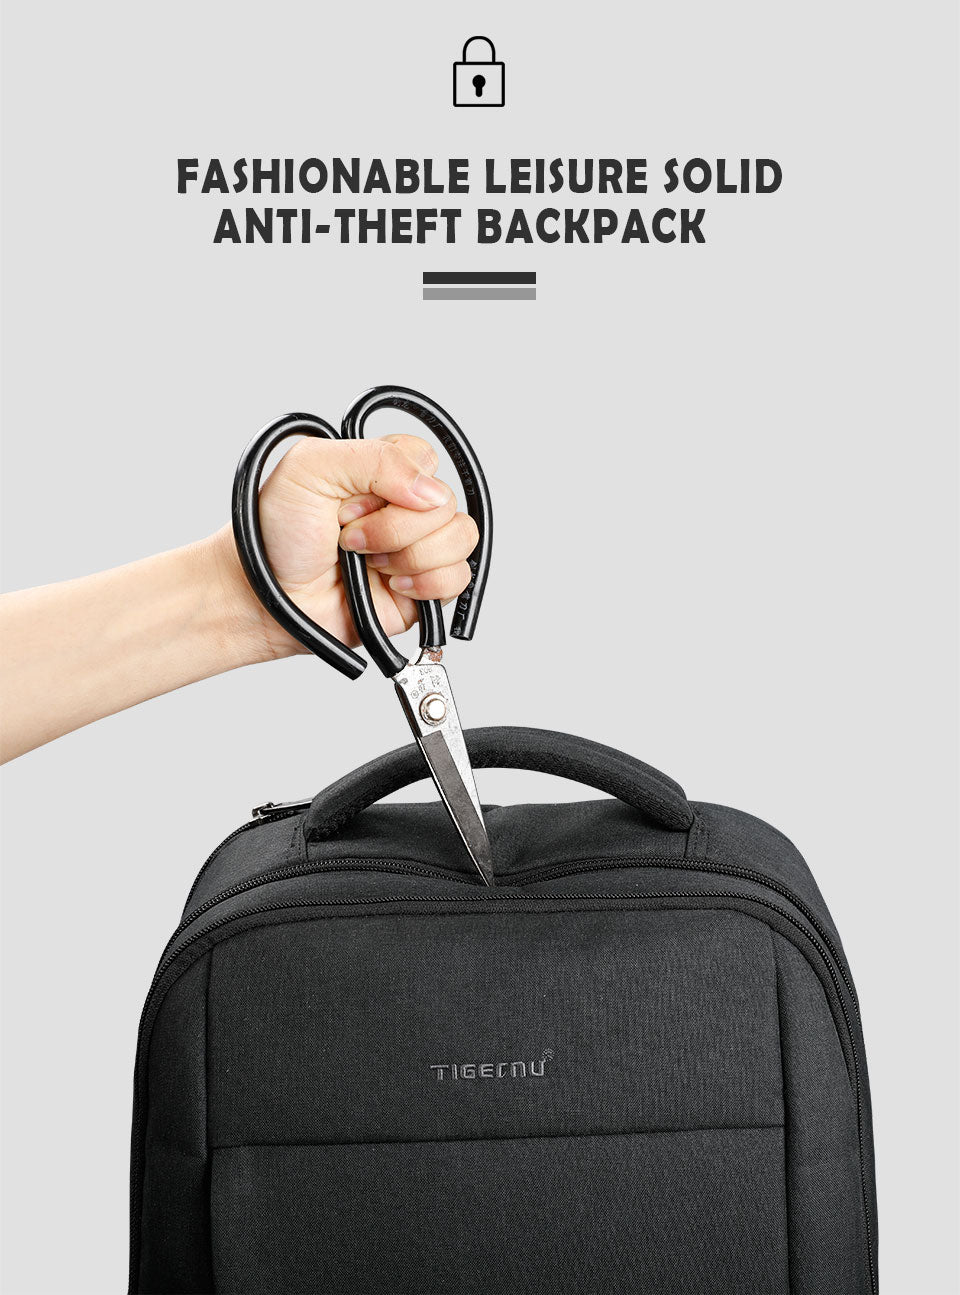 Business Laptop Backpack Anti-theft Daypack for Men 18L Laptop Backpacks Fashion School Bagpack